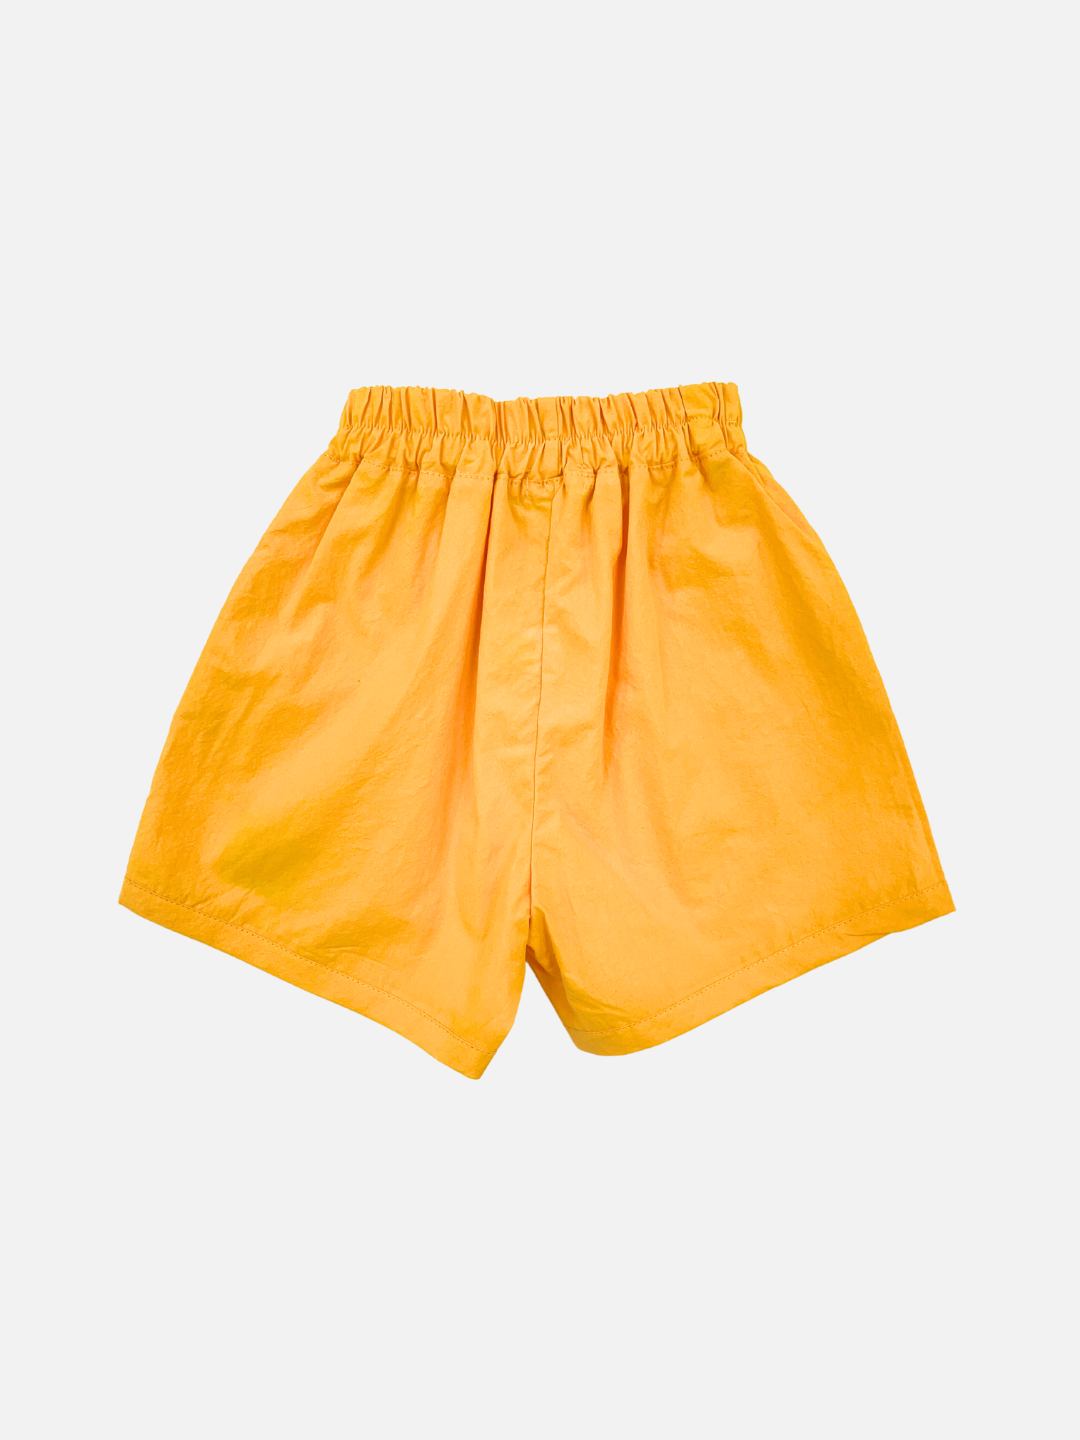 Orange kids' shorts back view.